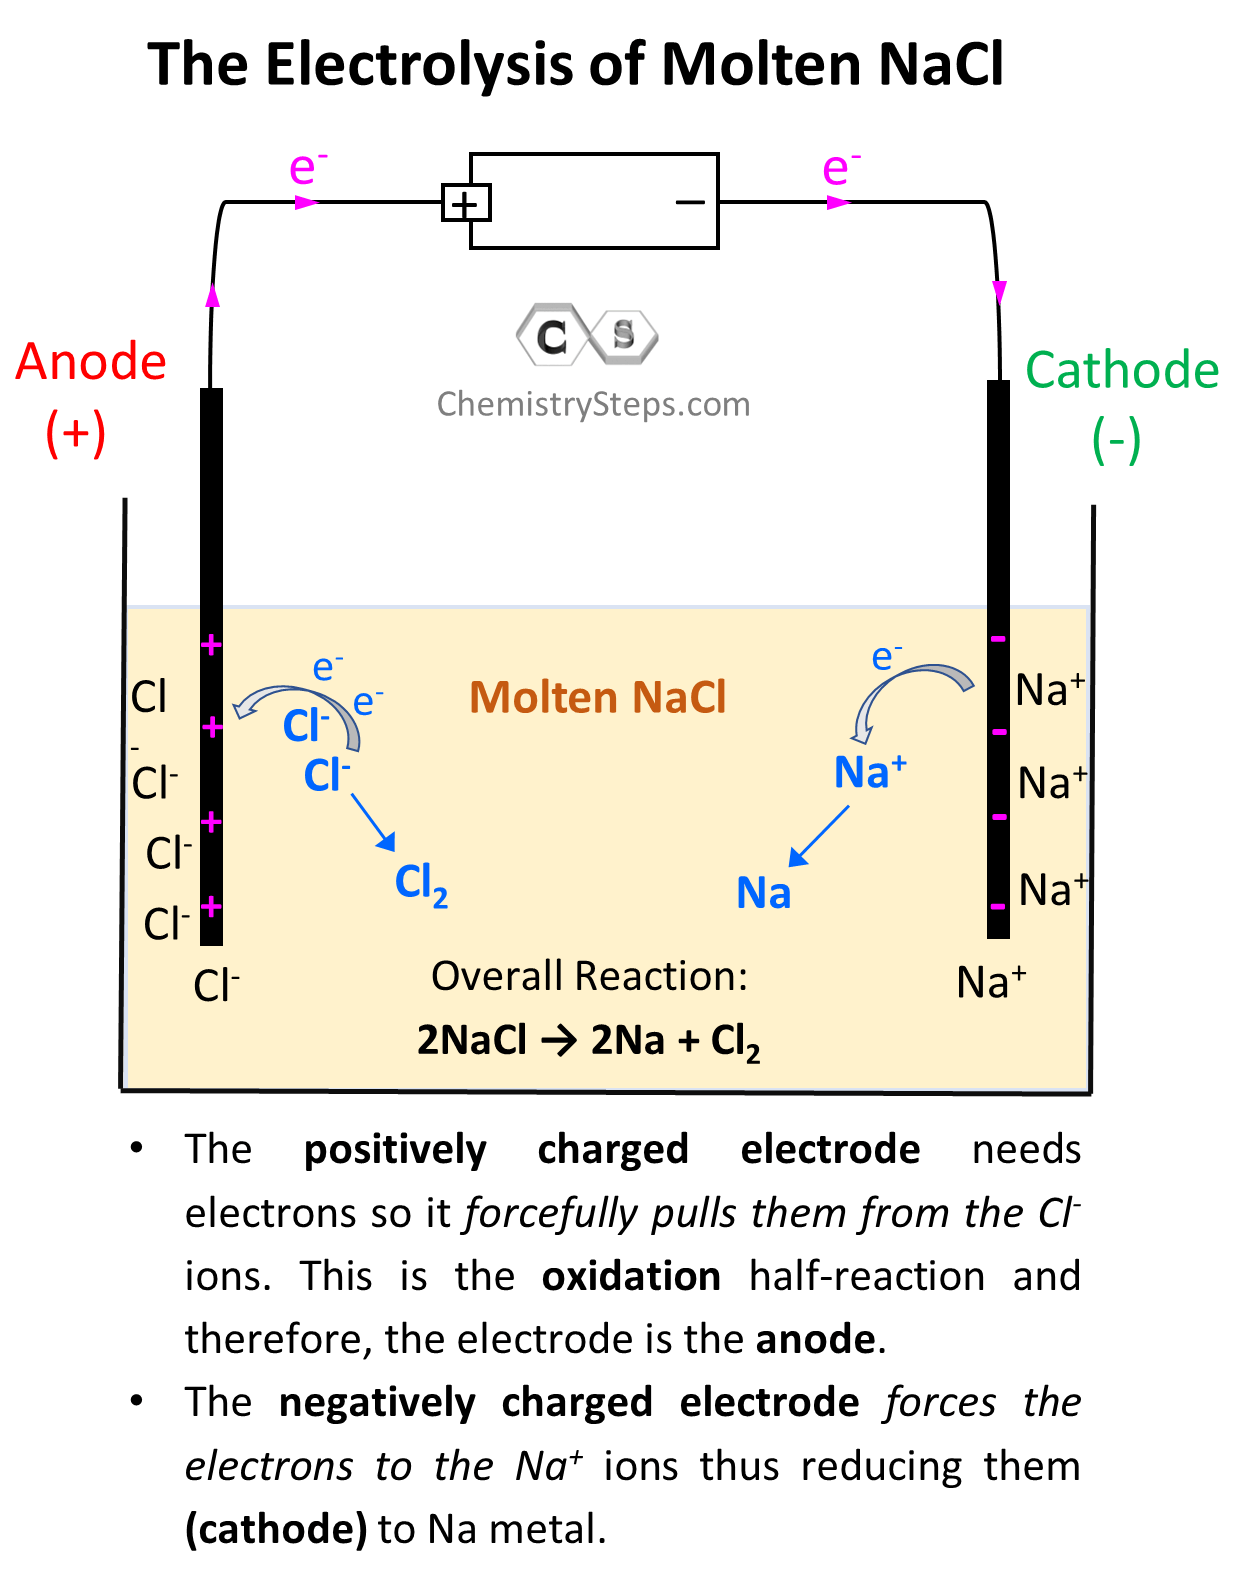 The Electrolysis of Molten NaCl